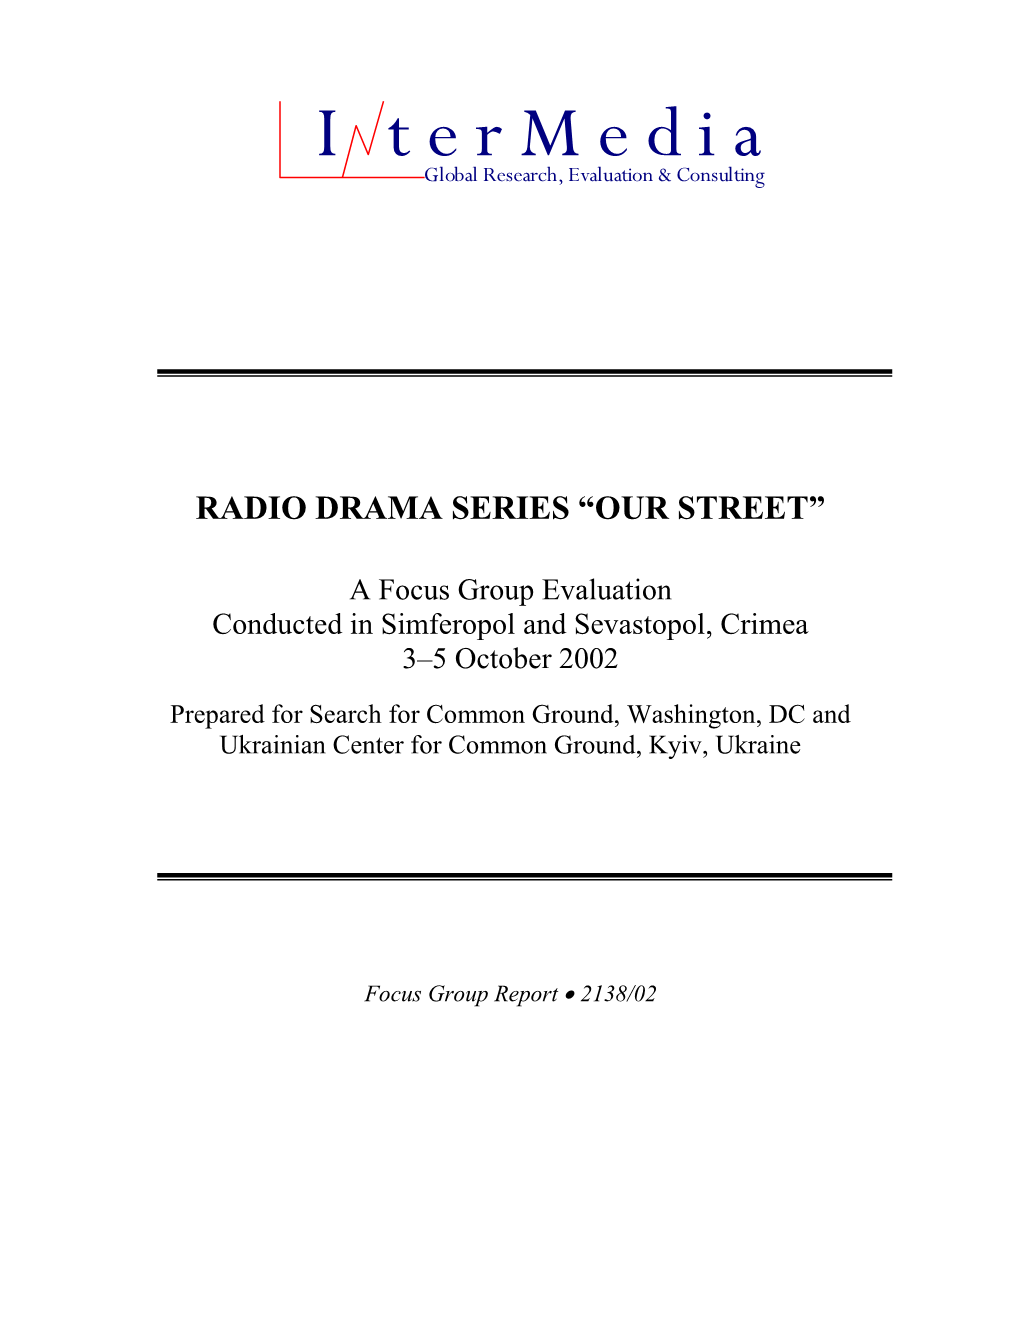 Radio Drama Series “Our Street”